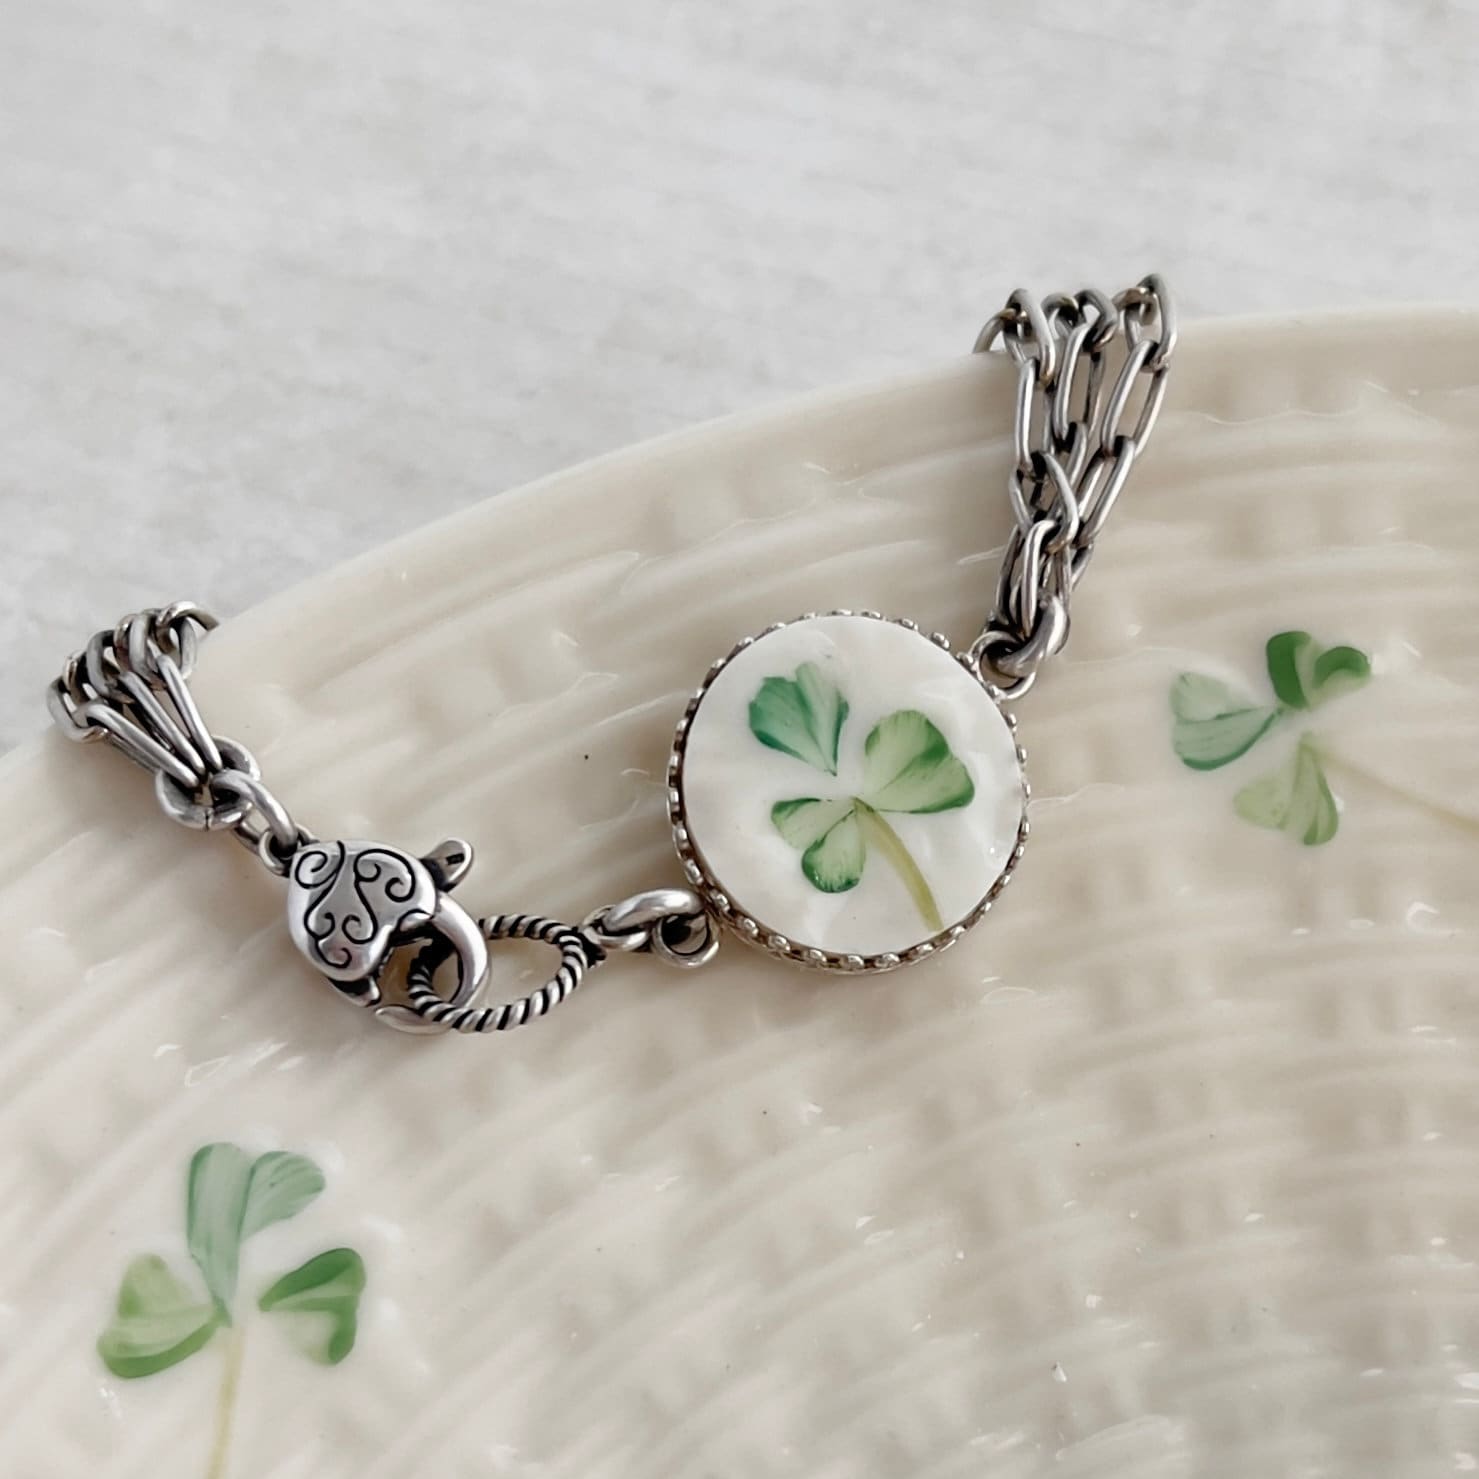 Sterling Silver Chain Bracelet, Vintage Irish Belleek Broken China Jewelry, Unique Anniversary Gifts for Women